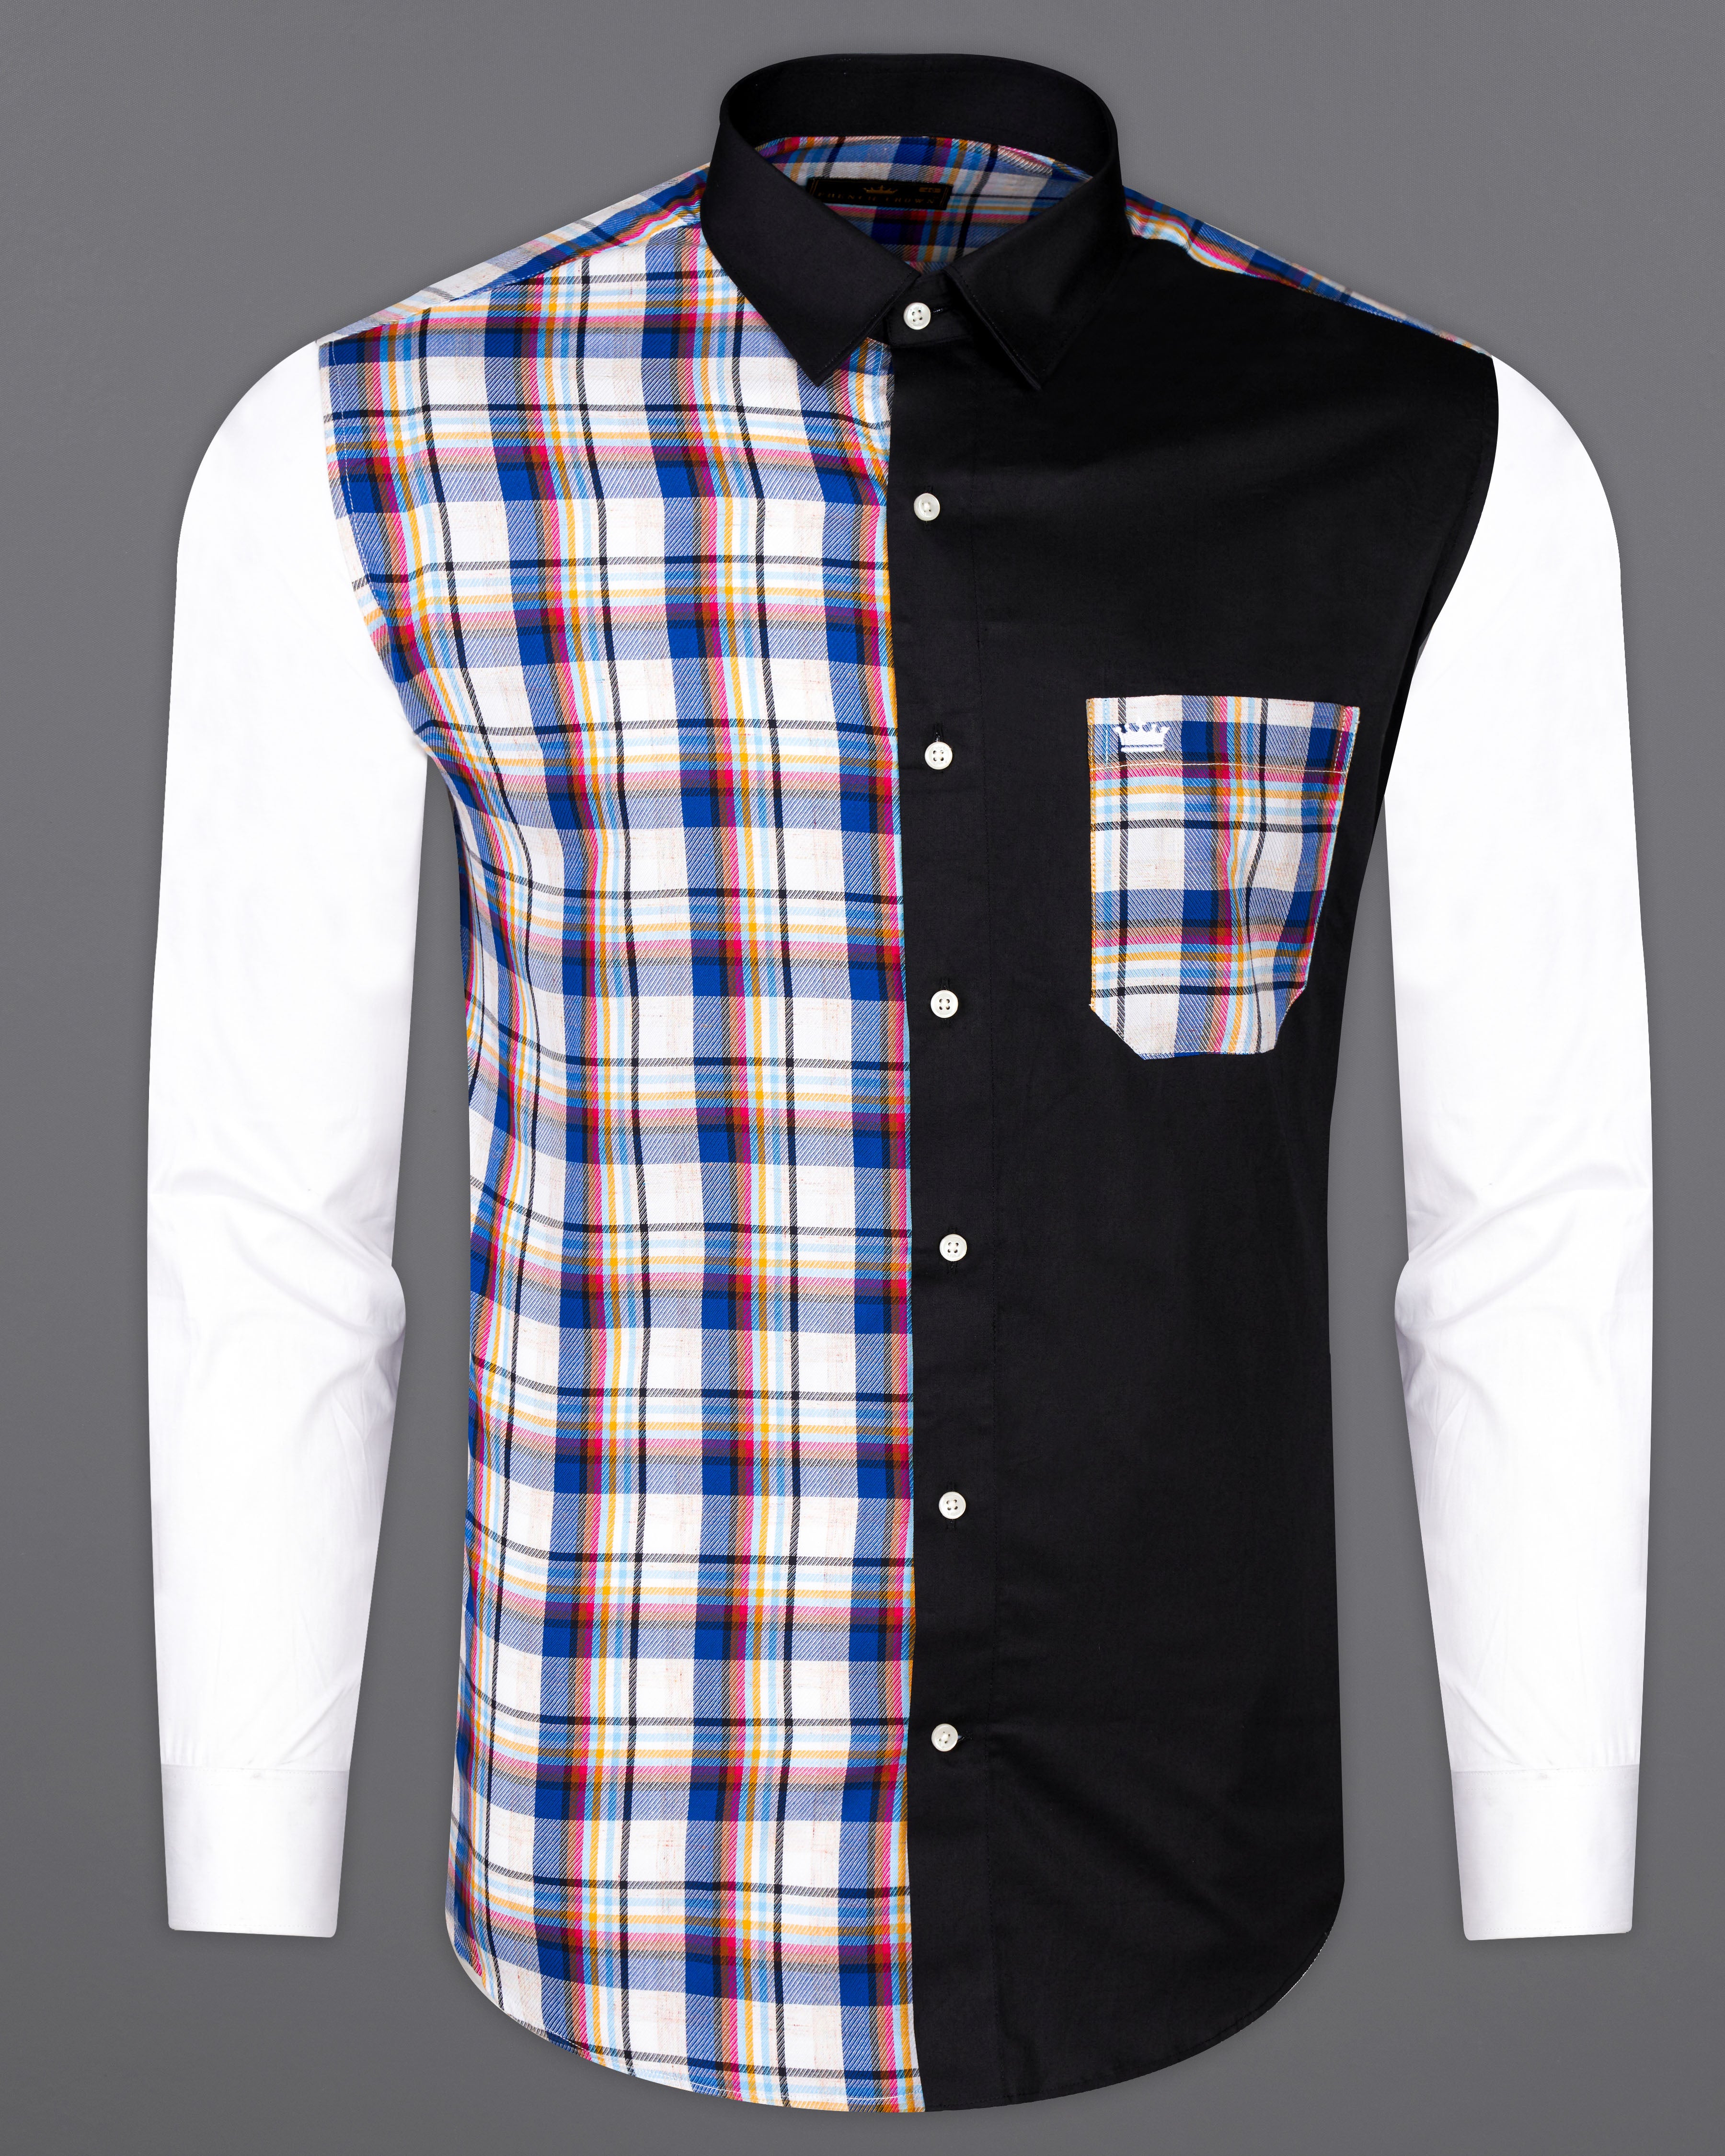 Bright White with Black and Cobalt Blue Checkered Super Soft Premium Cotton Designer Shirt 9757-P406-38, 9757-P406-H-38, 9757-P406-39, 9757-P406-H-39, 9757-P406-40, 9757-P406-H-40, 9757-P406-42, 9757-P406-H-42, 9757-P406-44, 9757-P406-H-44, 9757-P406-46, 9757-P406-H-46, 9757-P406-48, 9757-P406-H-48, 9757-P406-50, 9757-P406-H-50, 9757-P406-52, 9757-P406-H-52